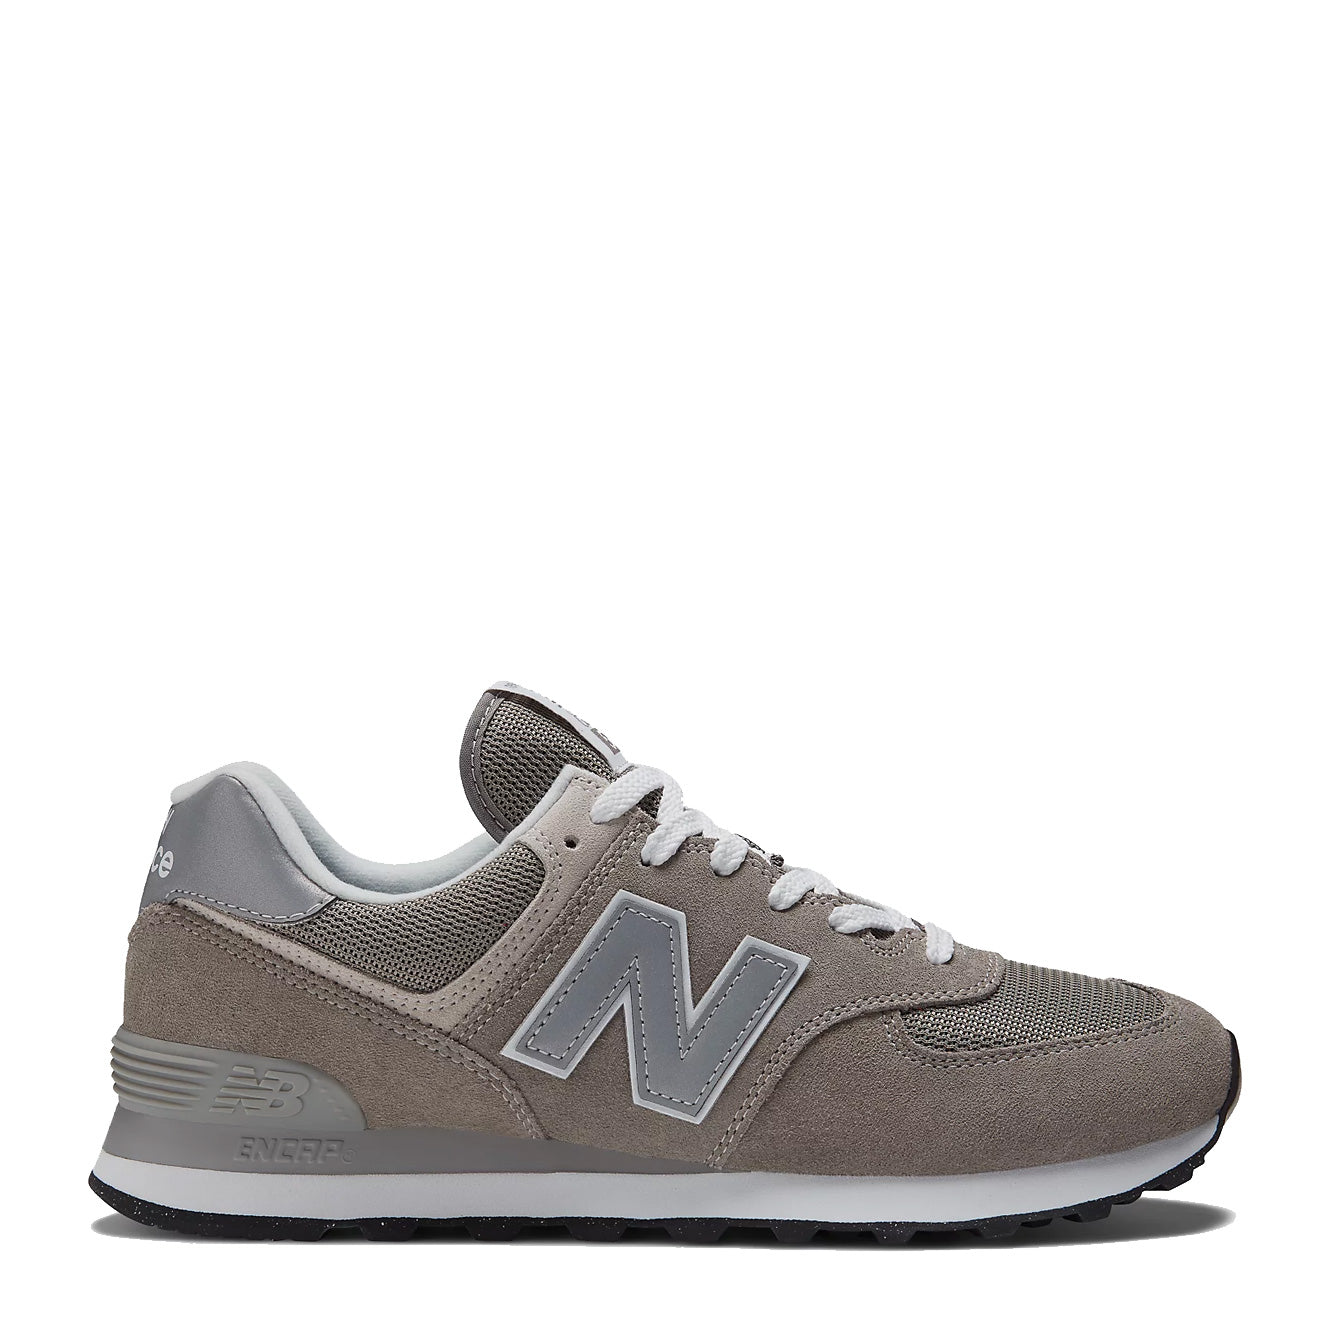 New Balance 574 Trainers Grey / White | Yards Store Menswear